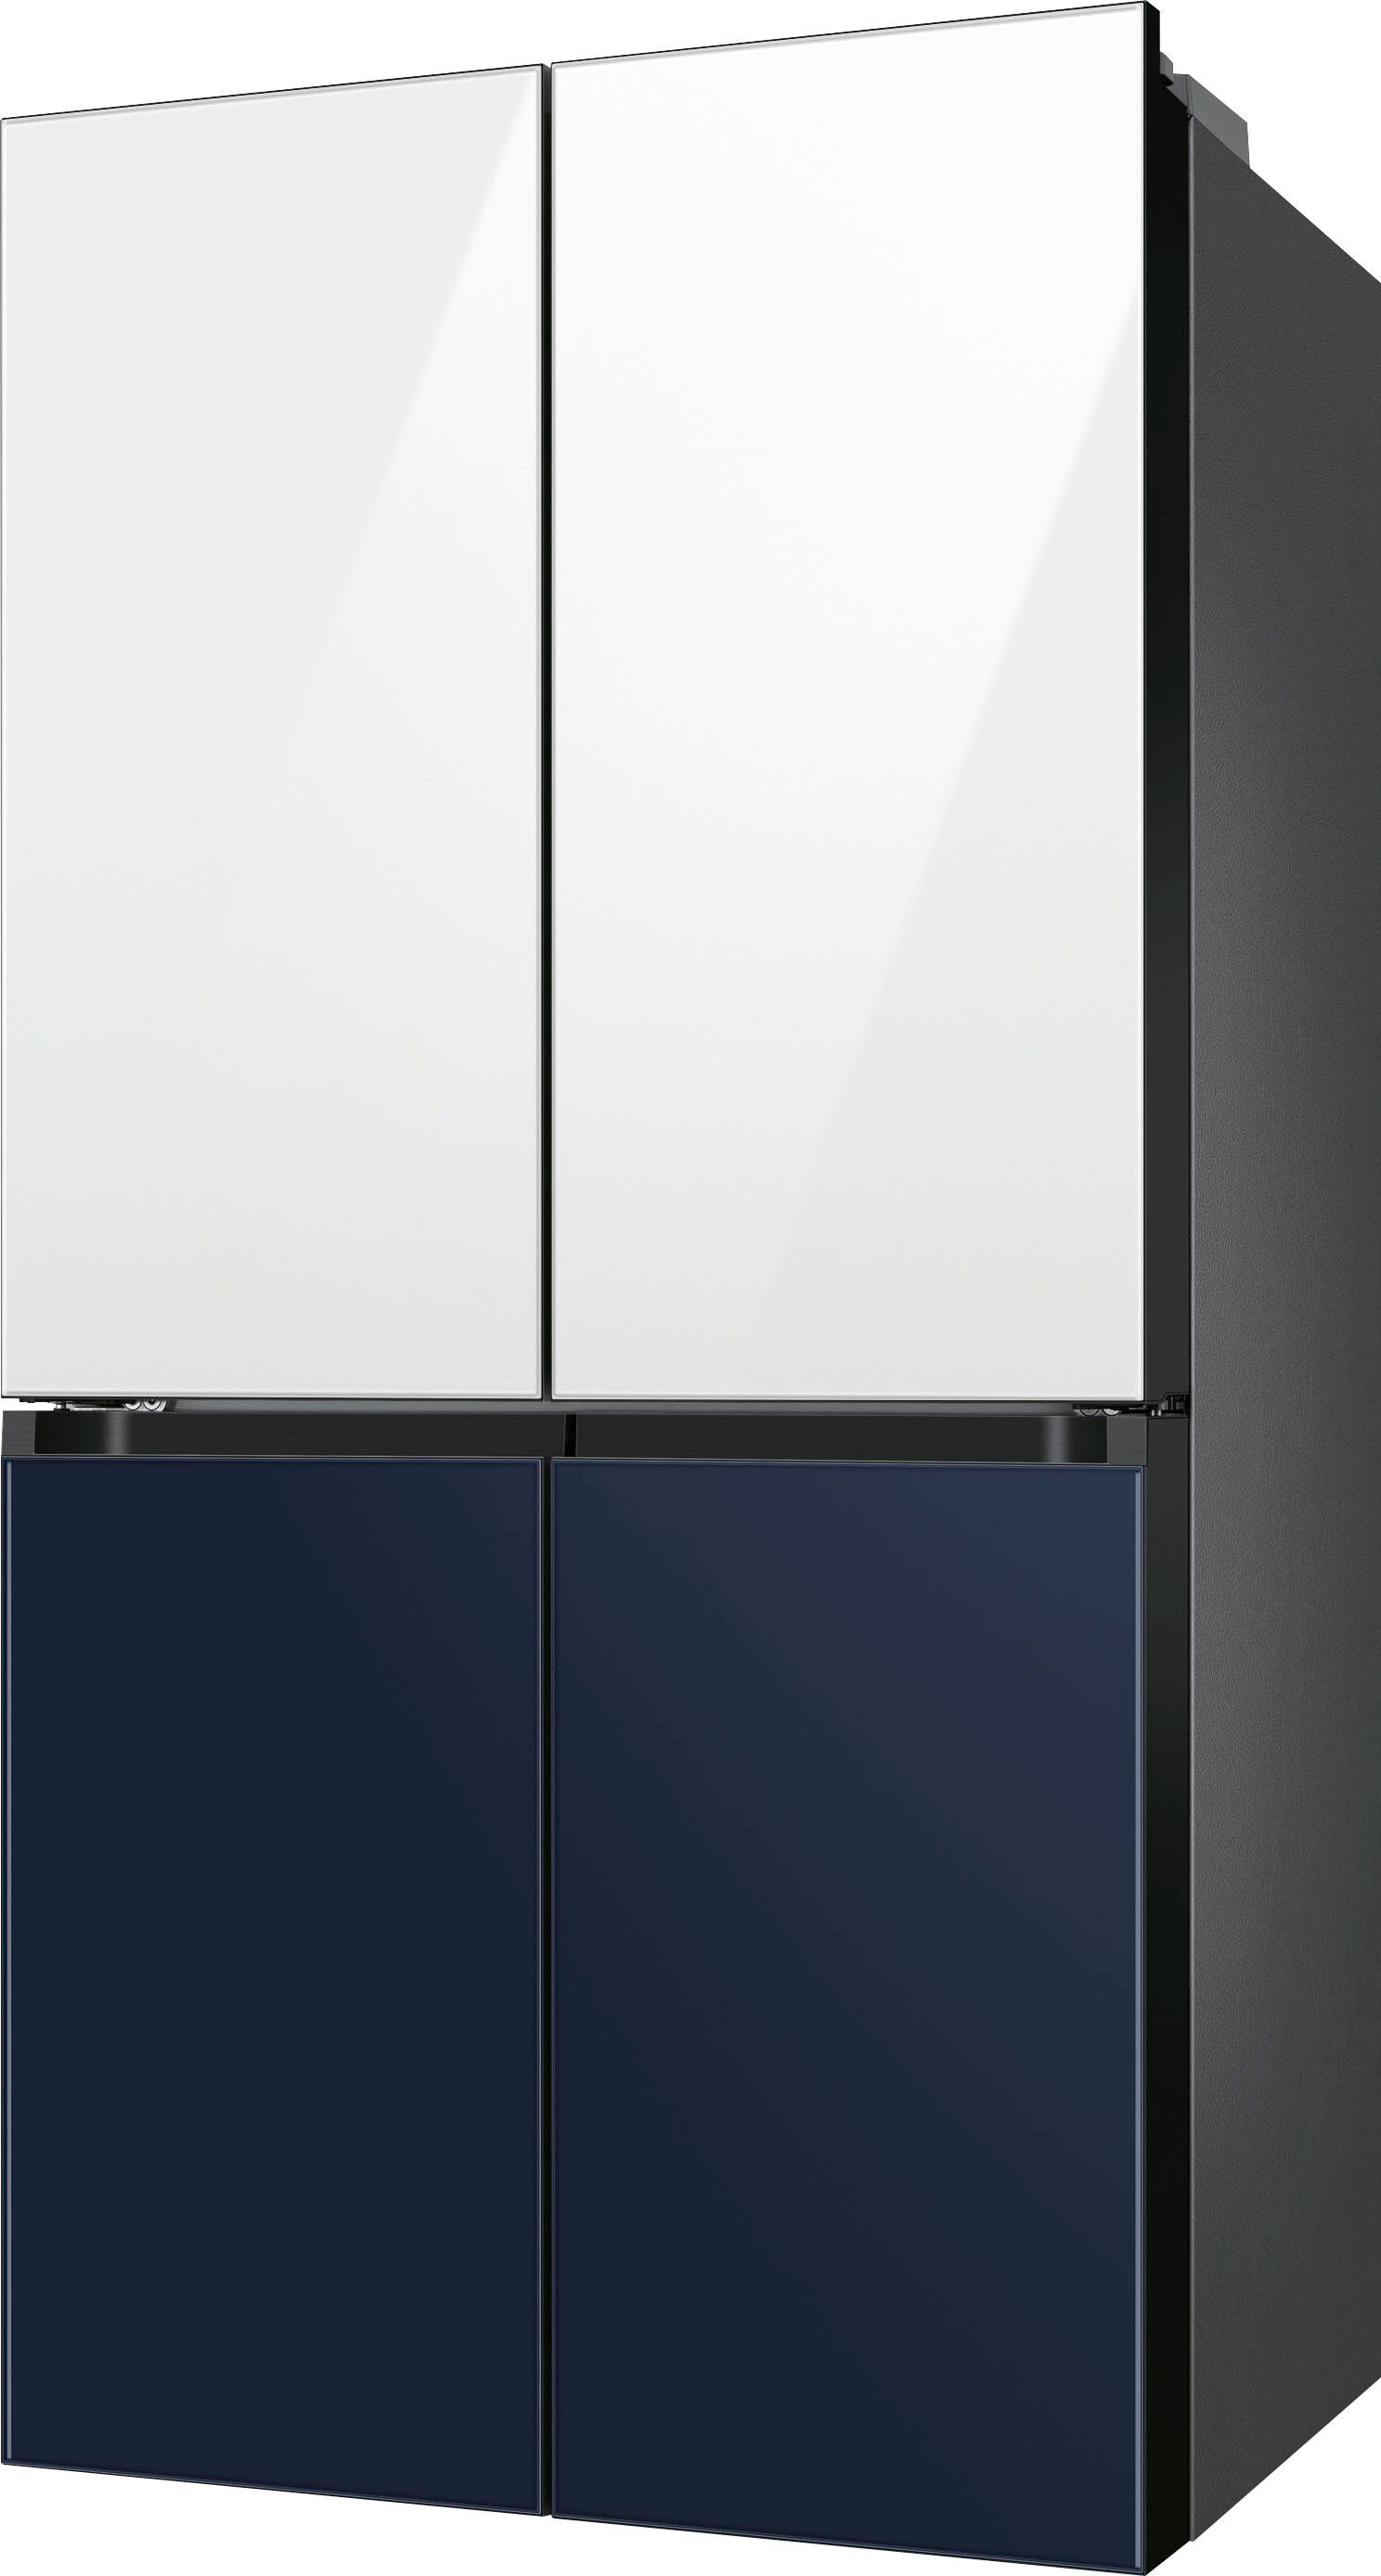 Samsung Multi Door RF65A96768A, 182,5 cm hoch, 91,2 cm breit